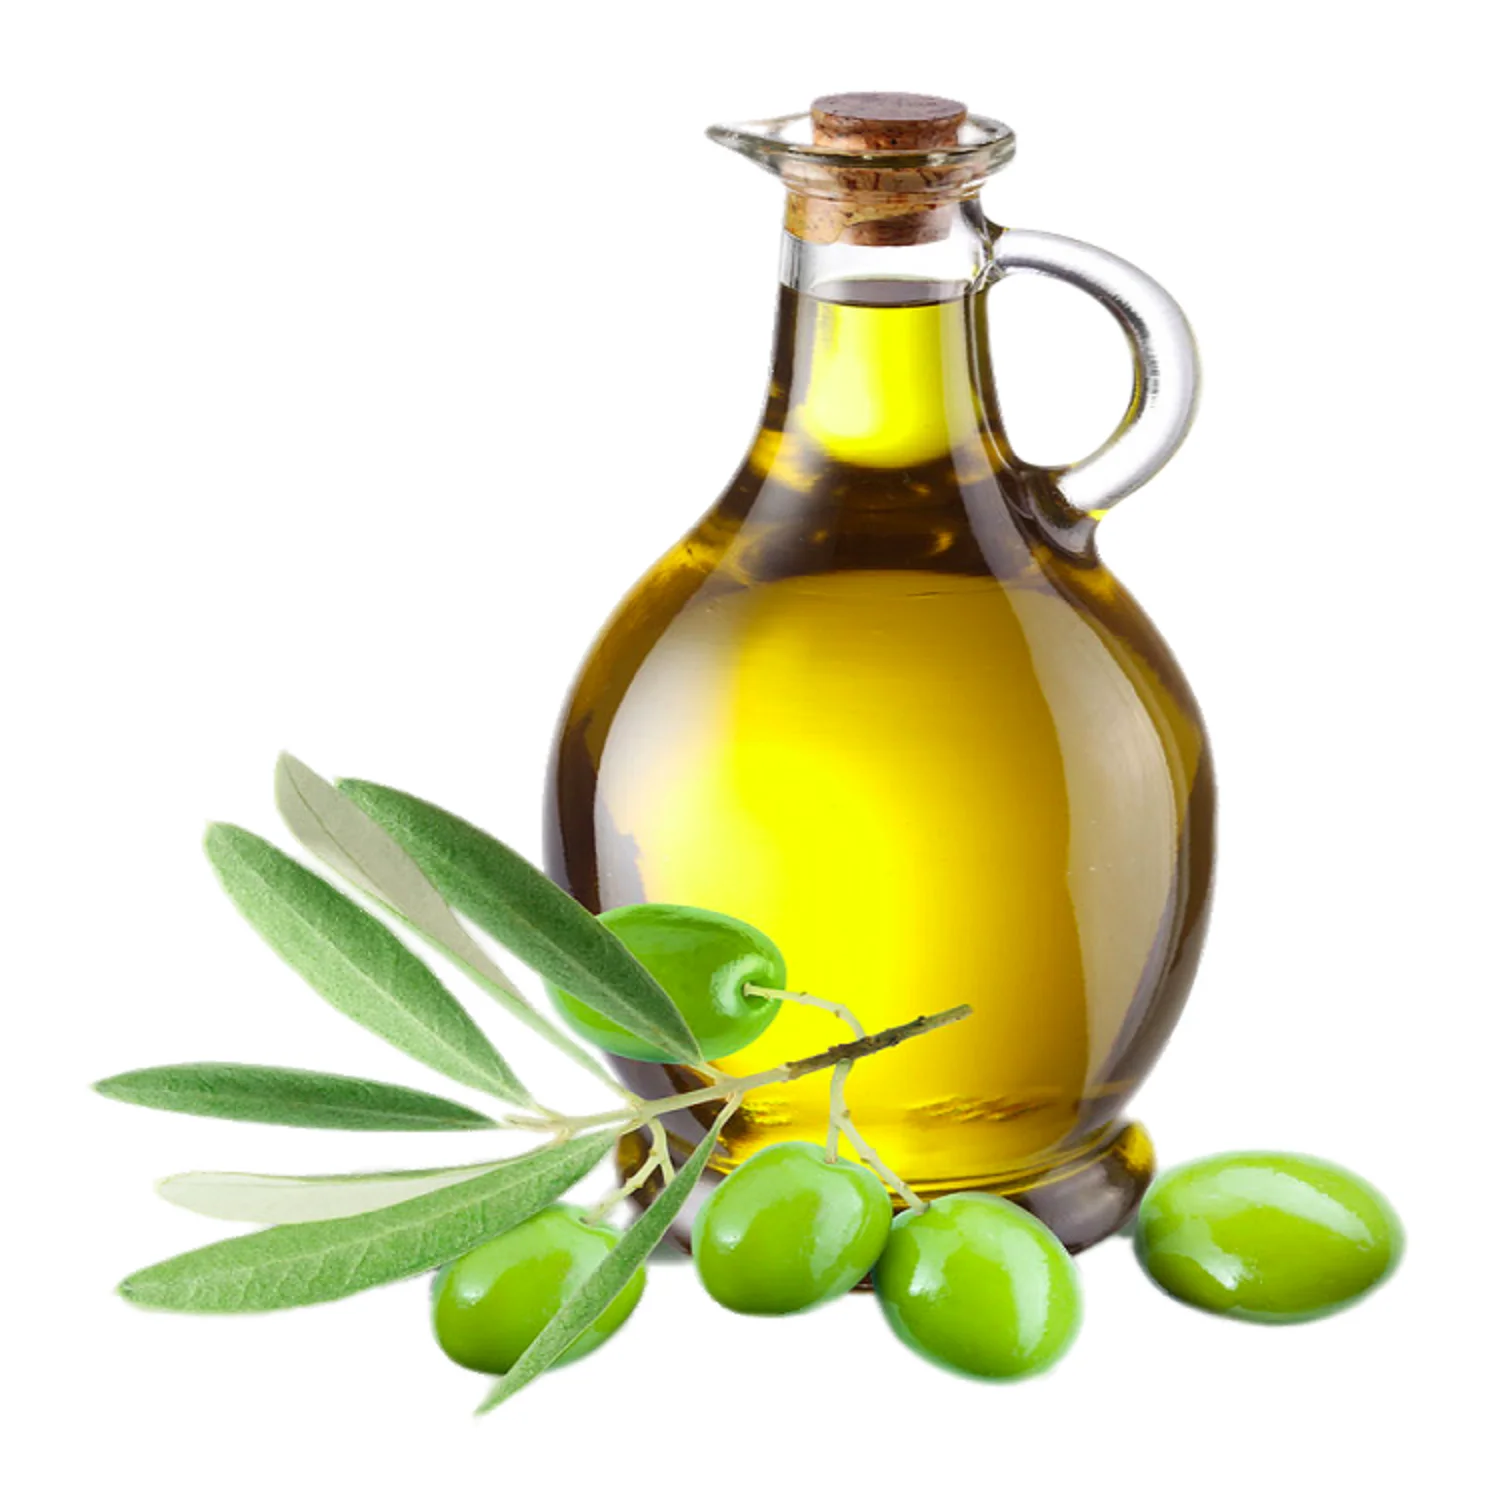 Olive Oil масло оливковое. Олив Ойл масло оливковое. Масло оливковое natural Olive Oil. Масло оливы, жожоба оливы. Вещество оливковое масло